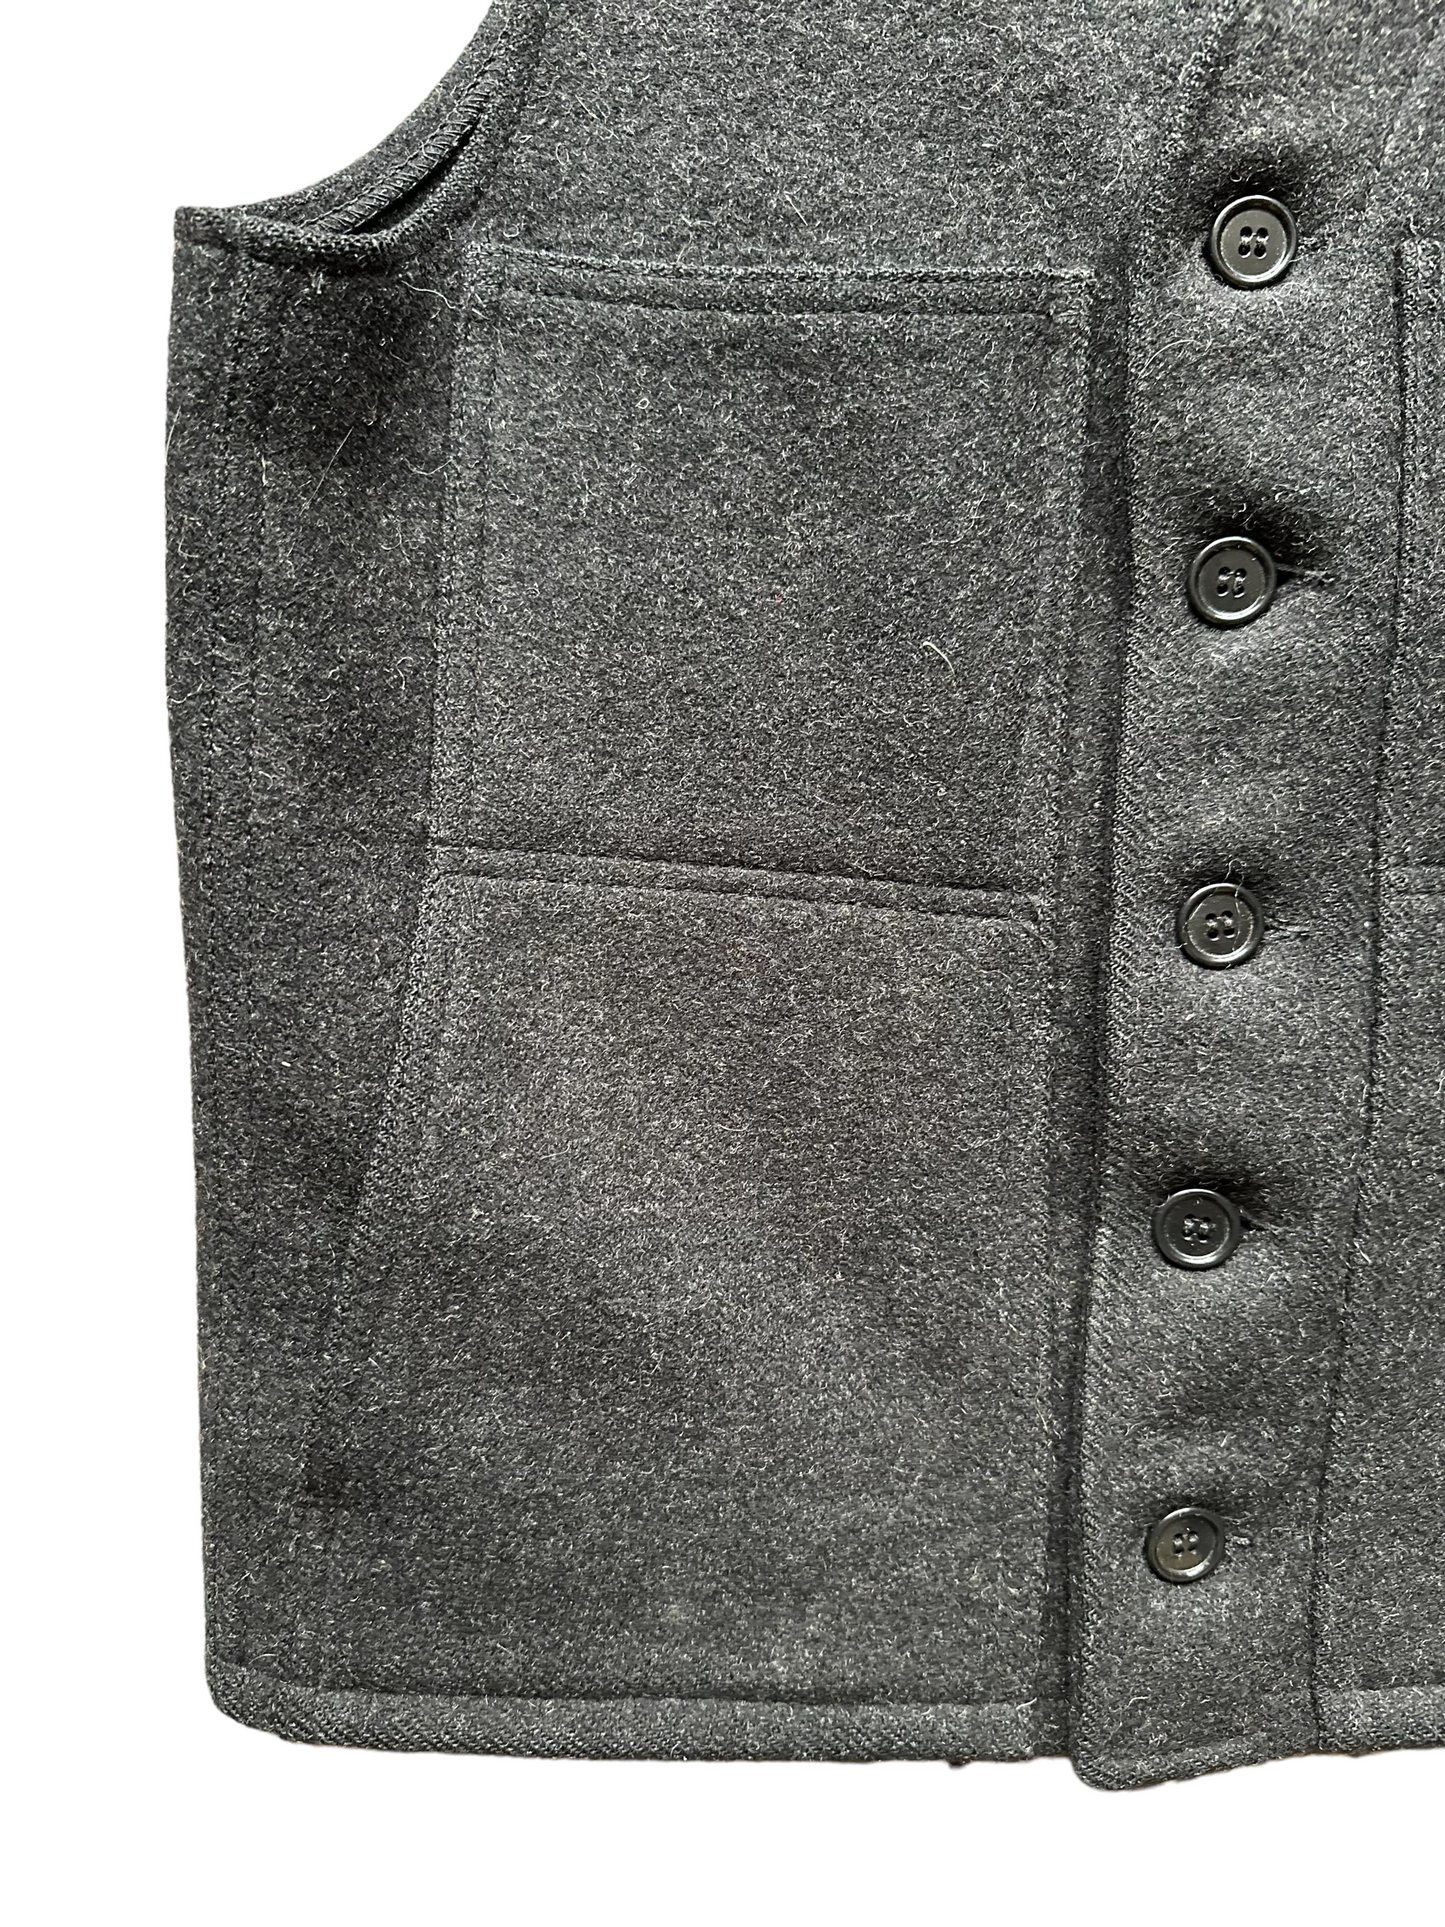 Lower Front Right Pocket View of Vintage Filson Mackinaw Vest SZ 36 |  Charcoal Grey Wool Vest | Vintage Seattle Workwear